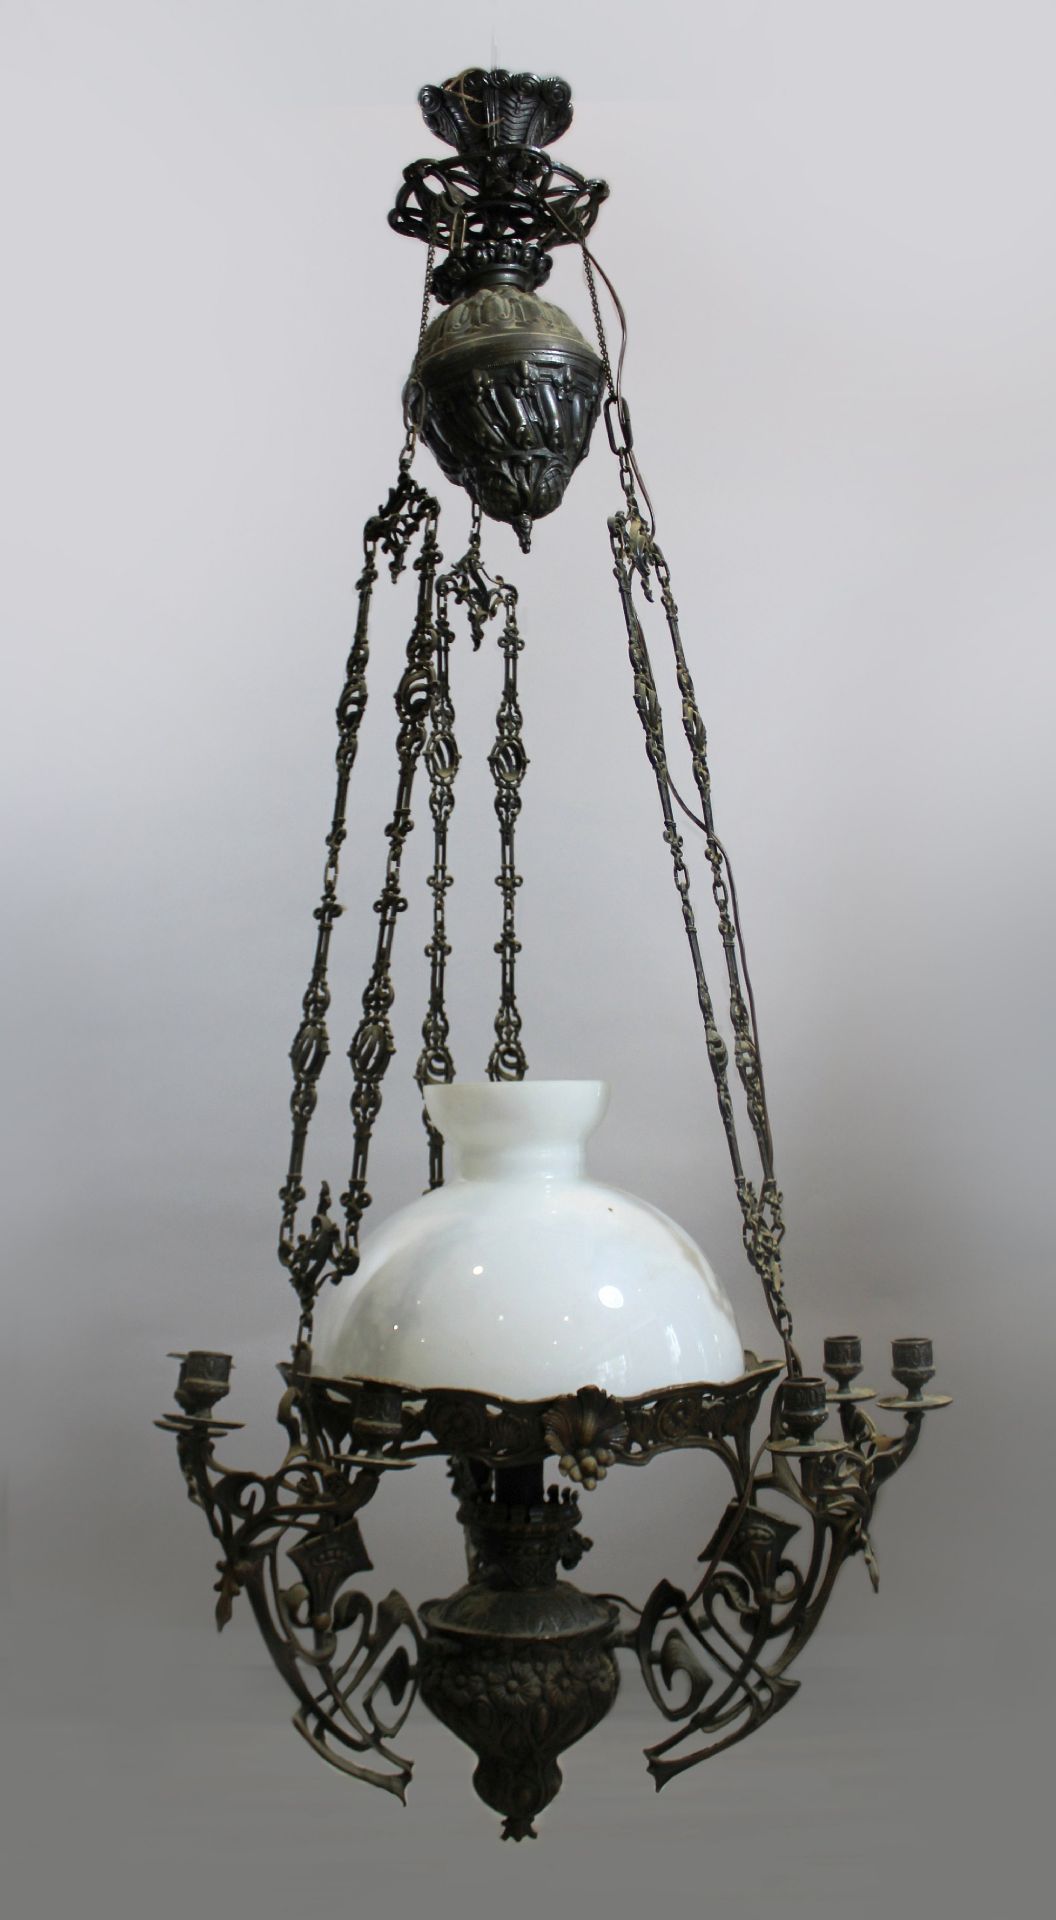 Kerzen- und Petroleumleuchter, Jugendstil, Glas, Eisen, um 1900, 9-flammig, Maße: H. 135 cm, B. 55